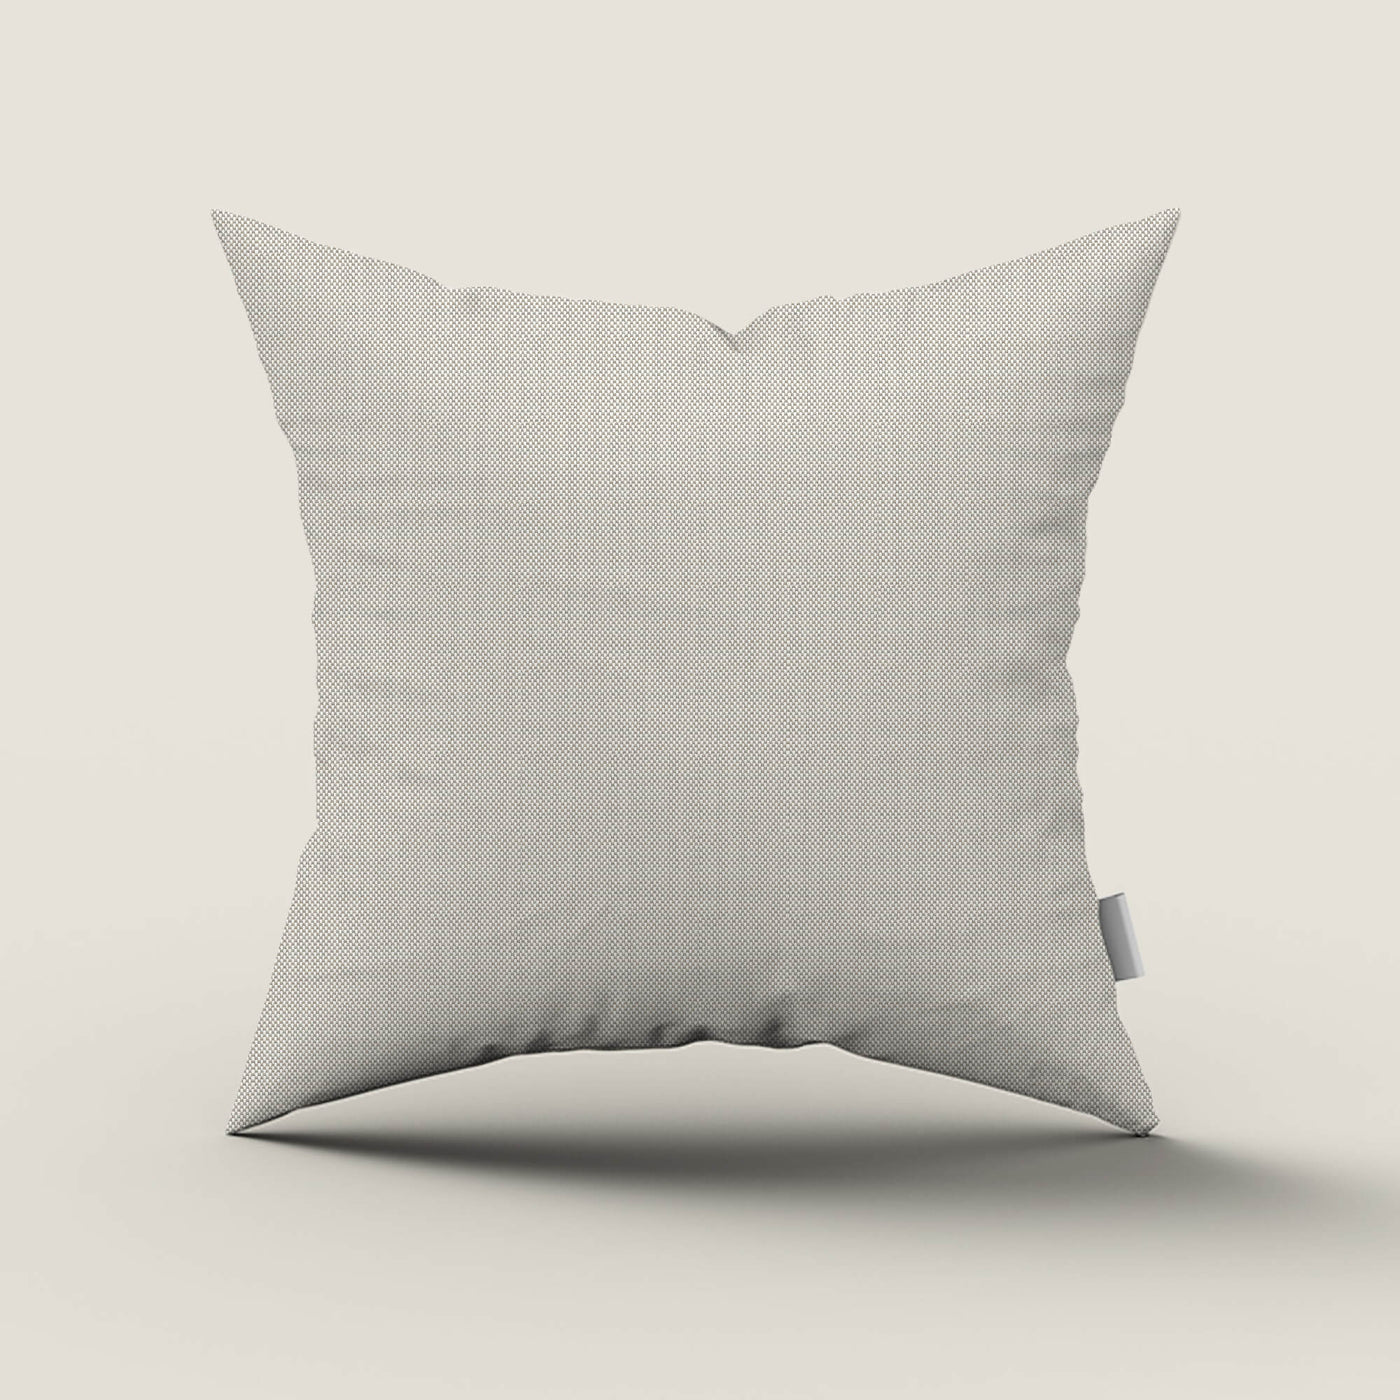 PENGI Waterproof Outdoor Throw Pillows 1 Pcs - Grid